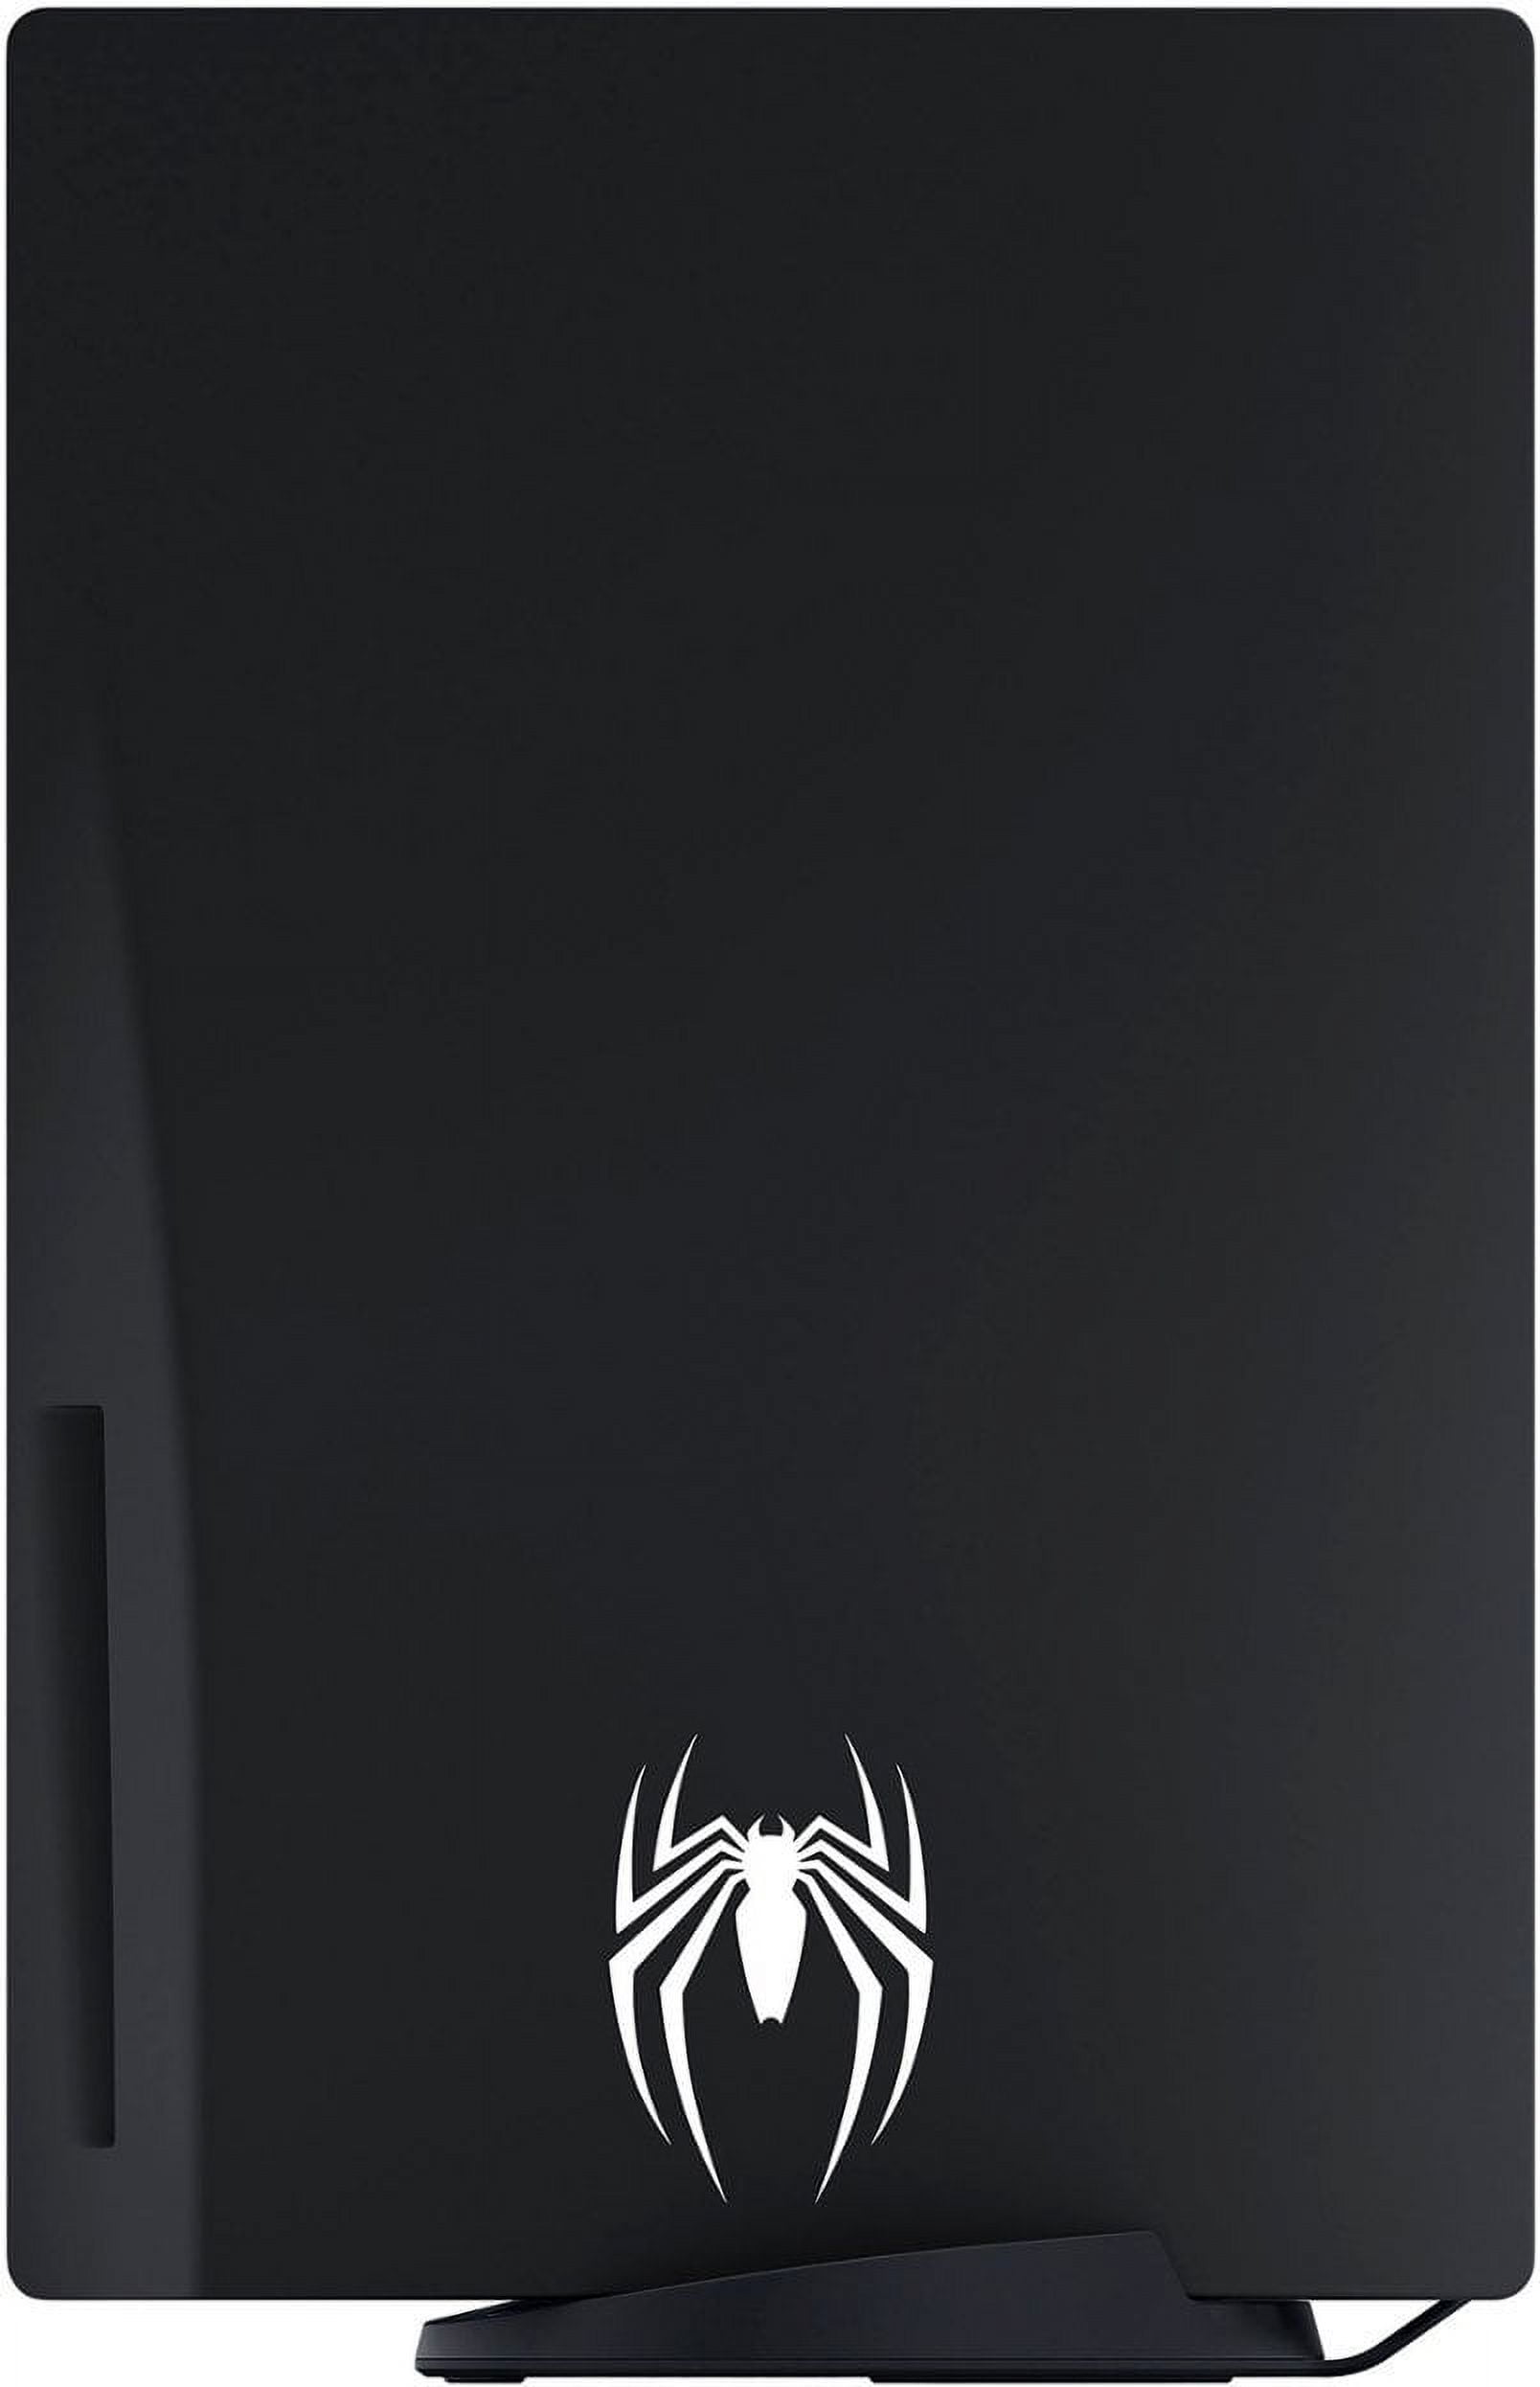 PlayStation 5 Slim Edition Bundle w/Spider-Man 2 Game & Charging Dock -  22404763